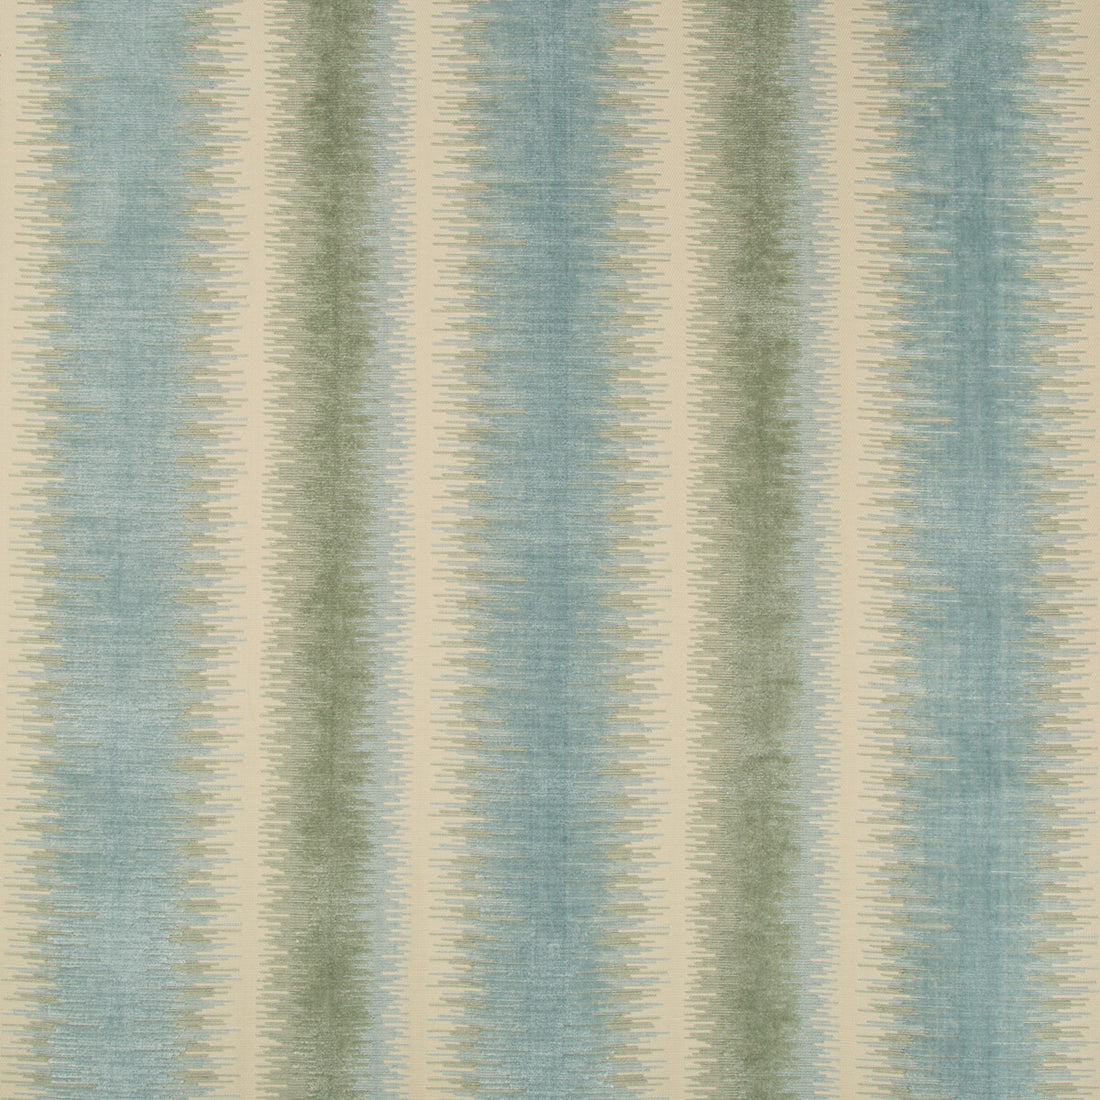 Bromo Velvet fabric in seafoam color - pattern 8018115.13.0 - by Brunschwig &amp; Fils in the Baret collection